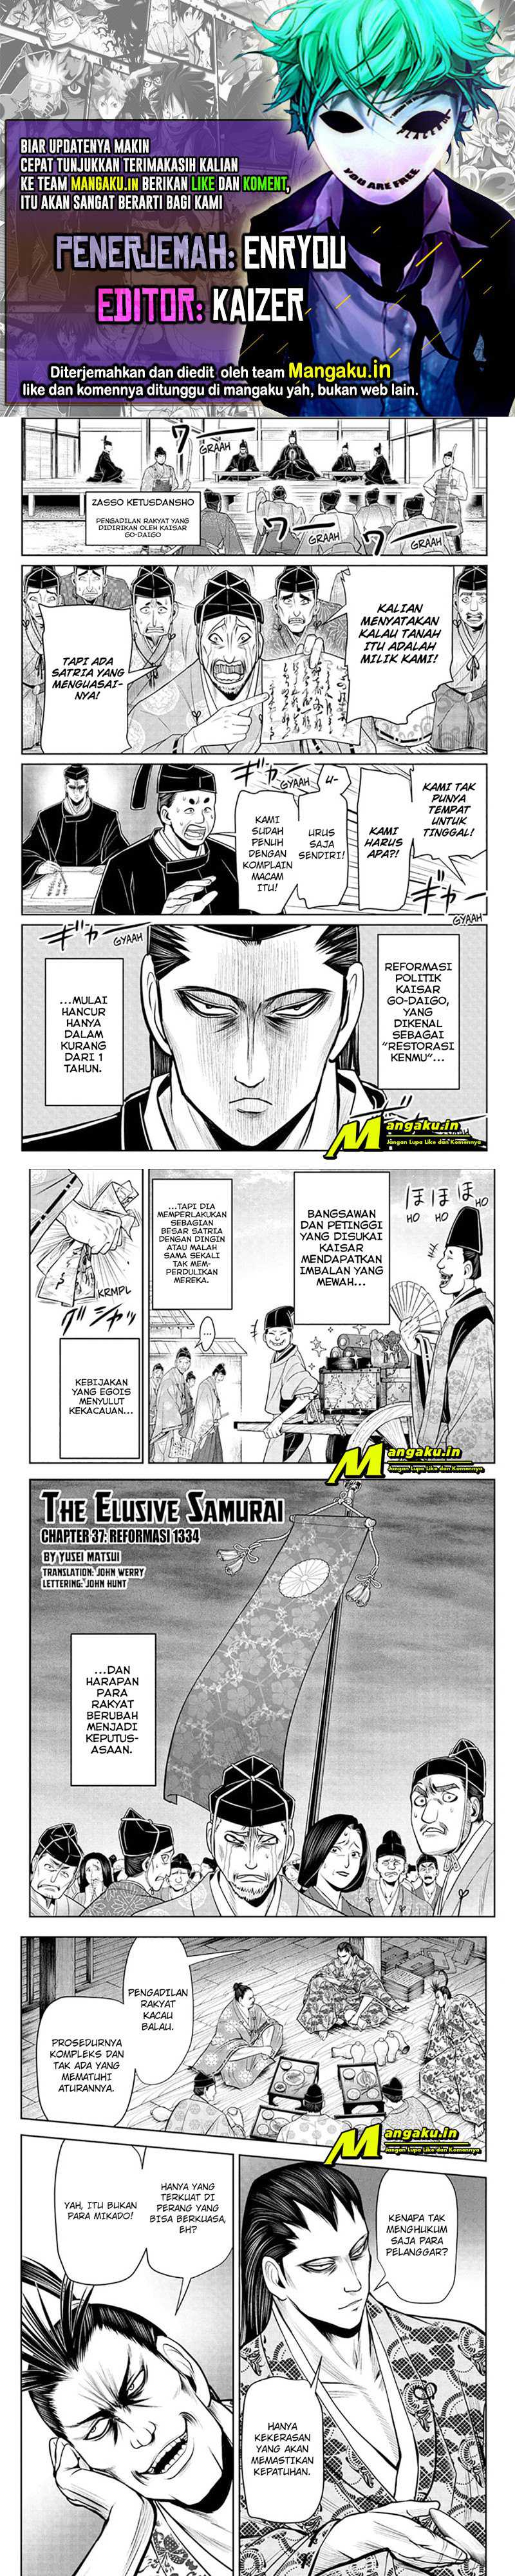 The Elusive Samurai Chapter 37 1